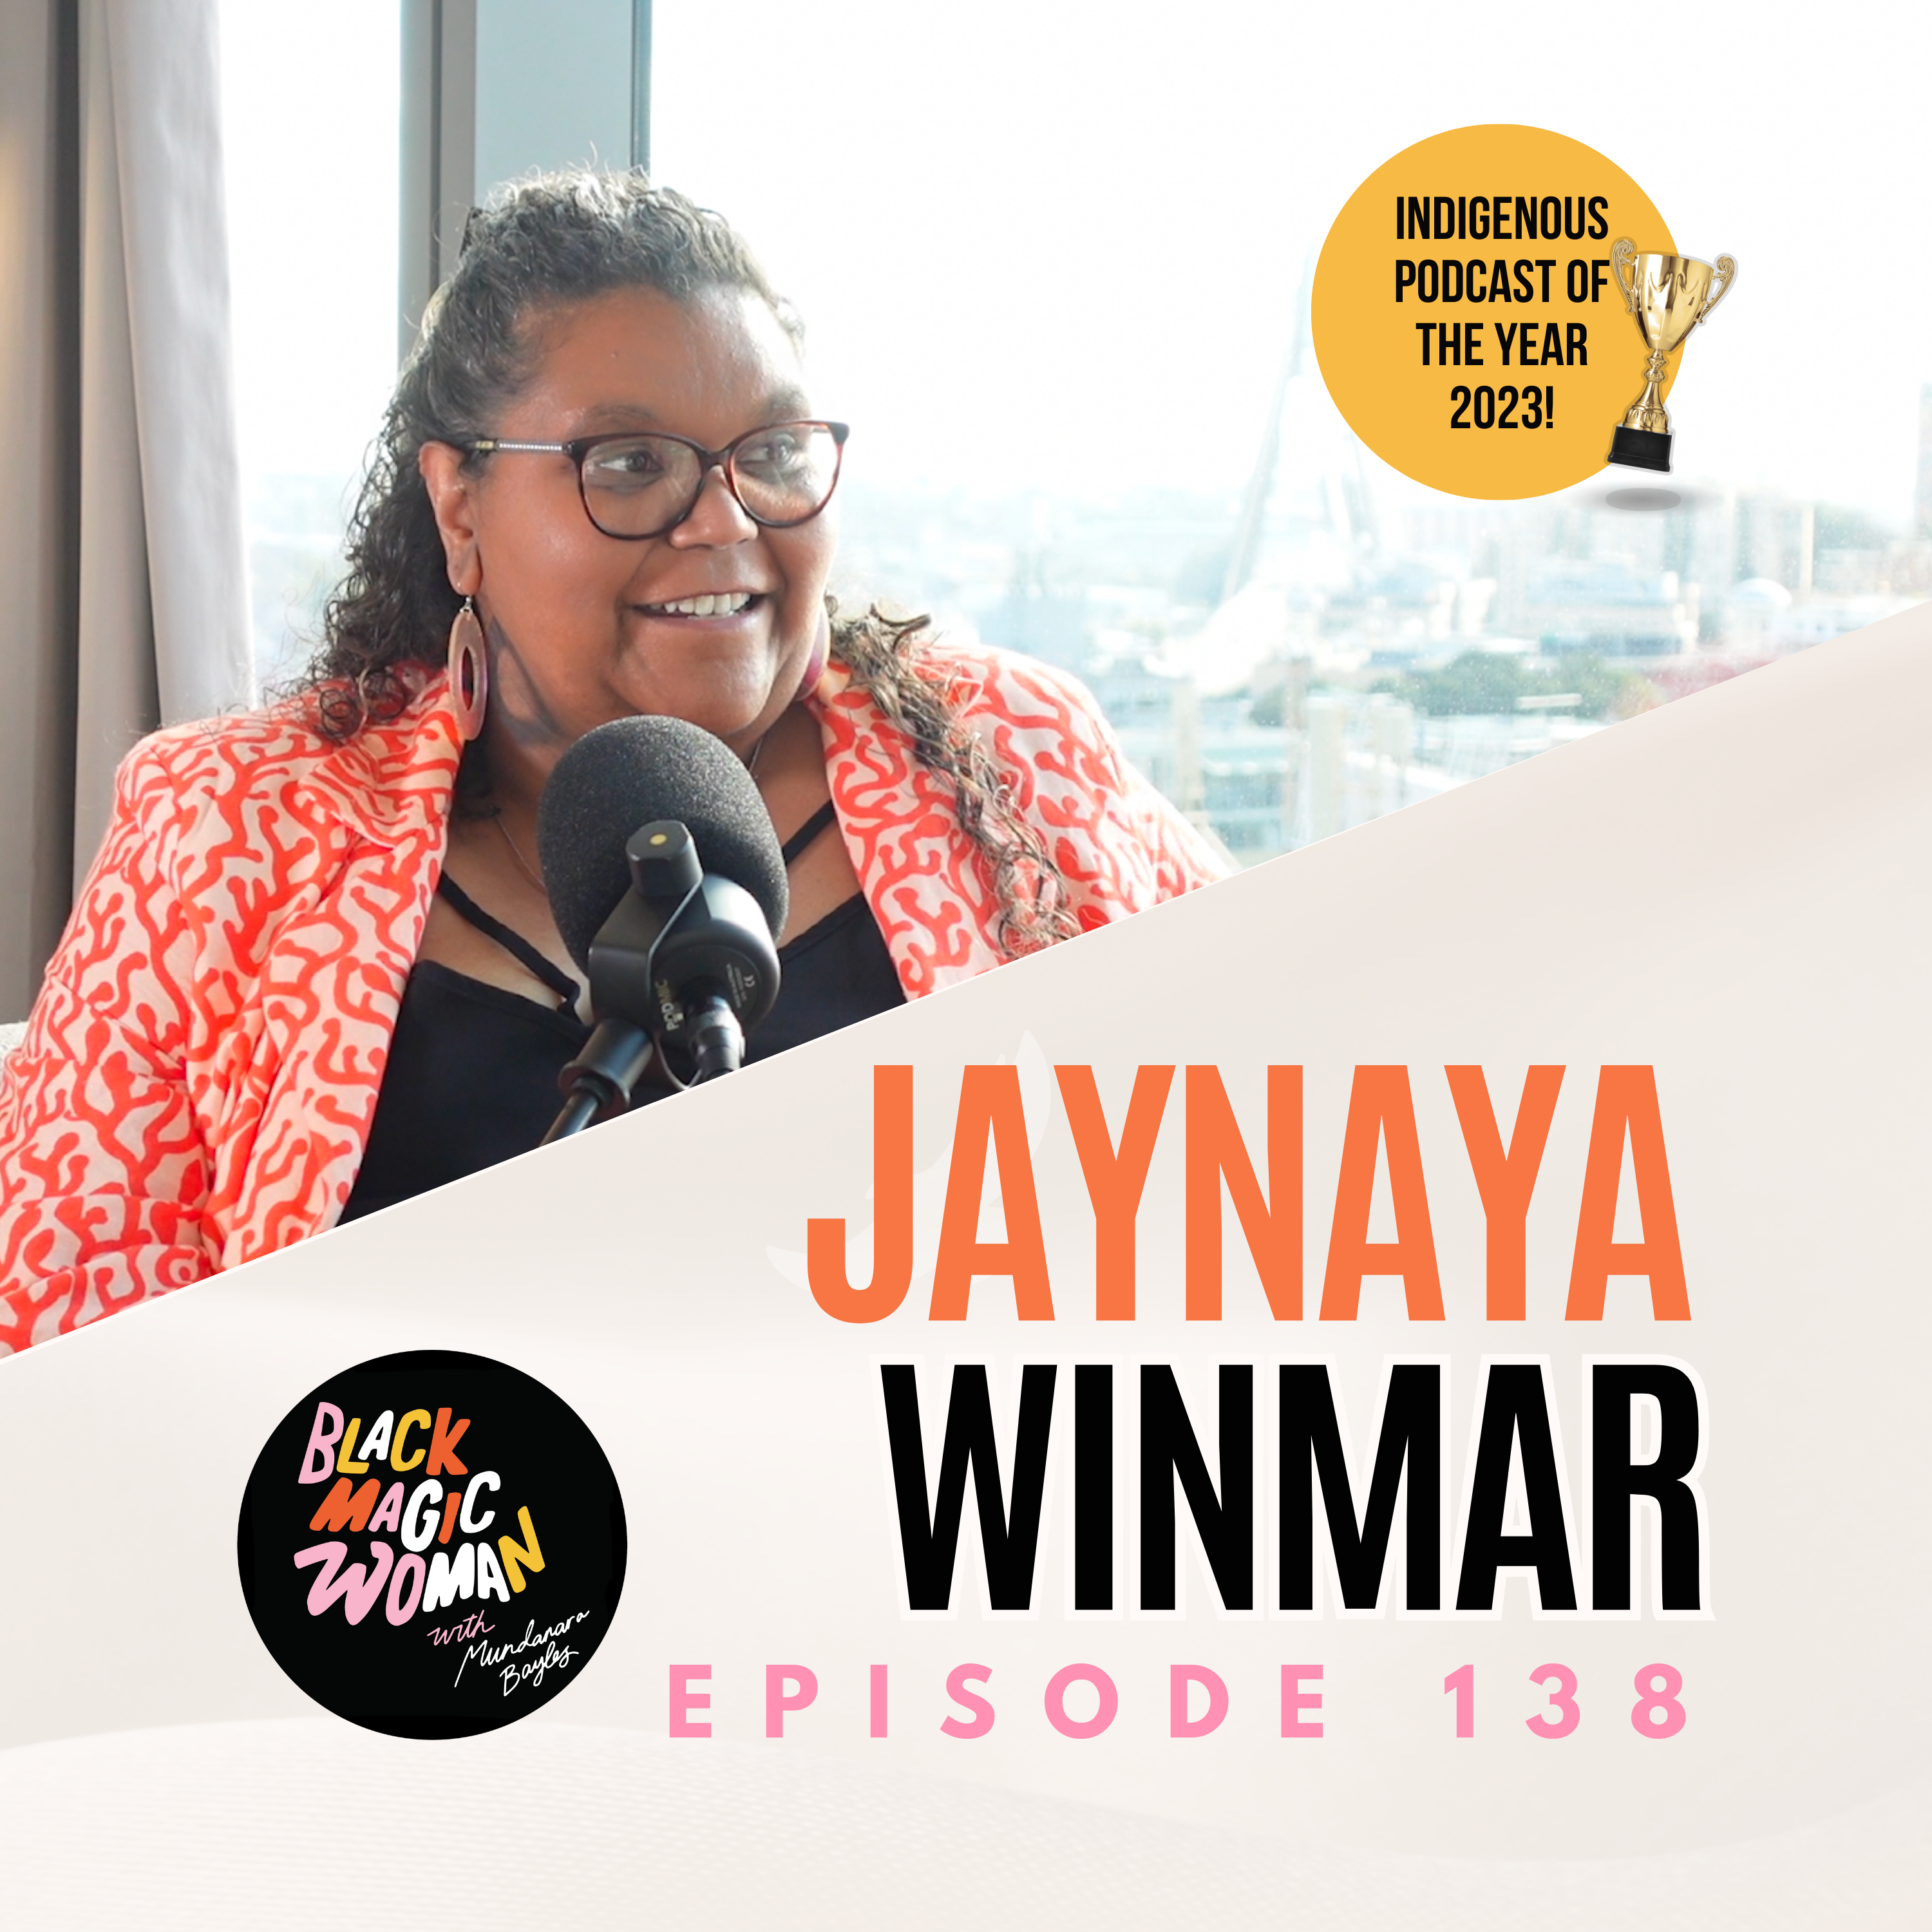 Jaynaya Winmar